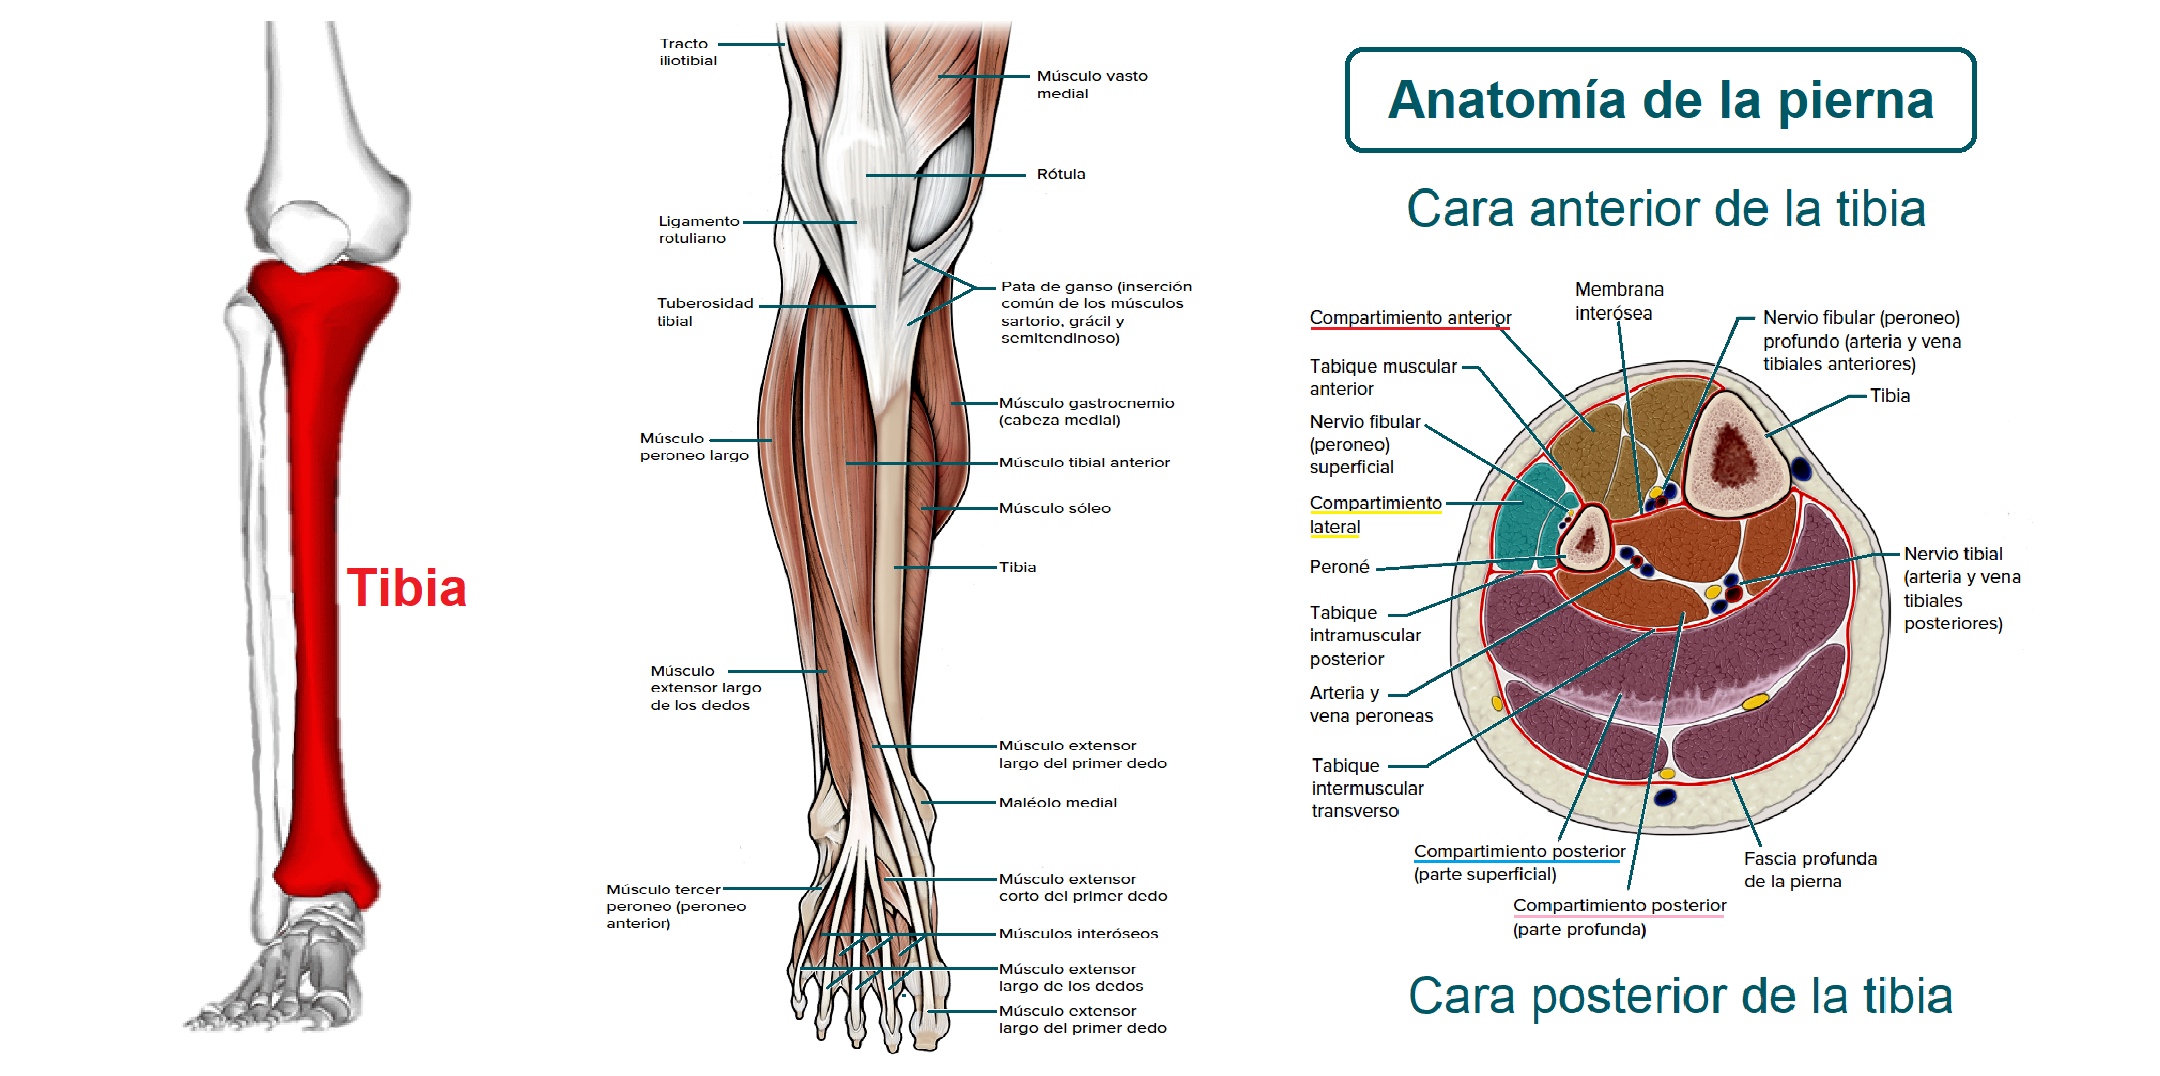 anatomia de la pierna